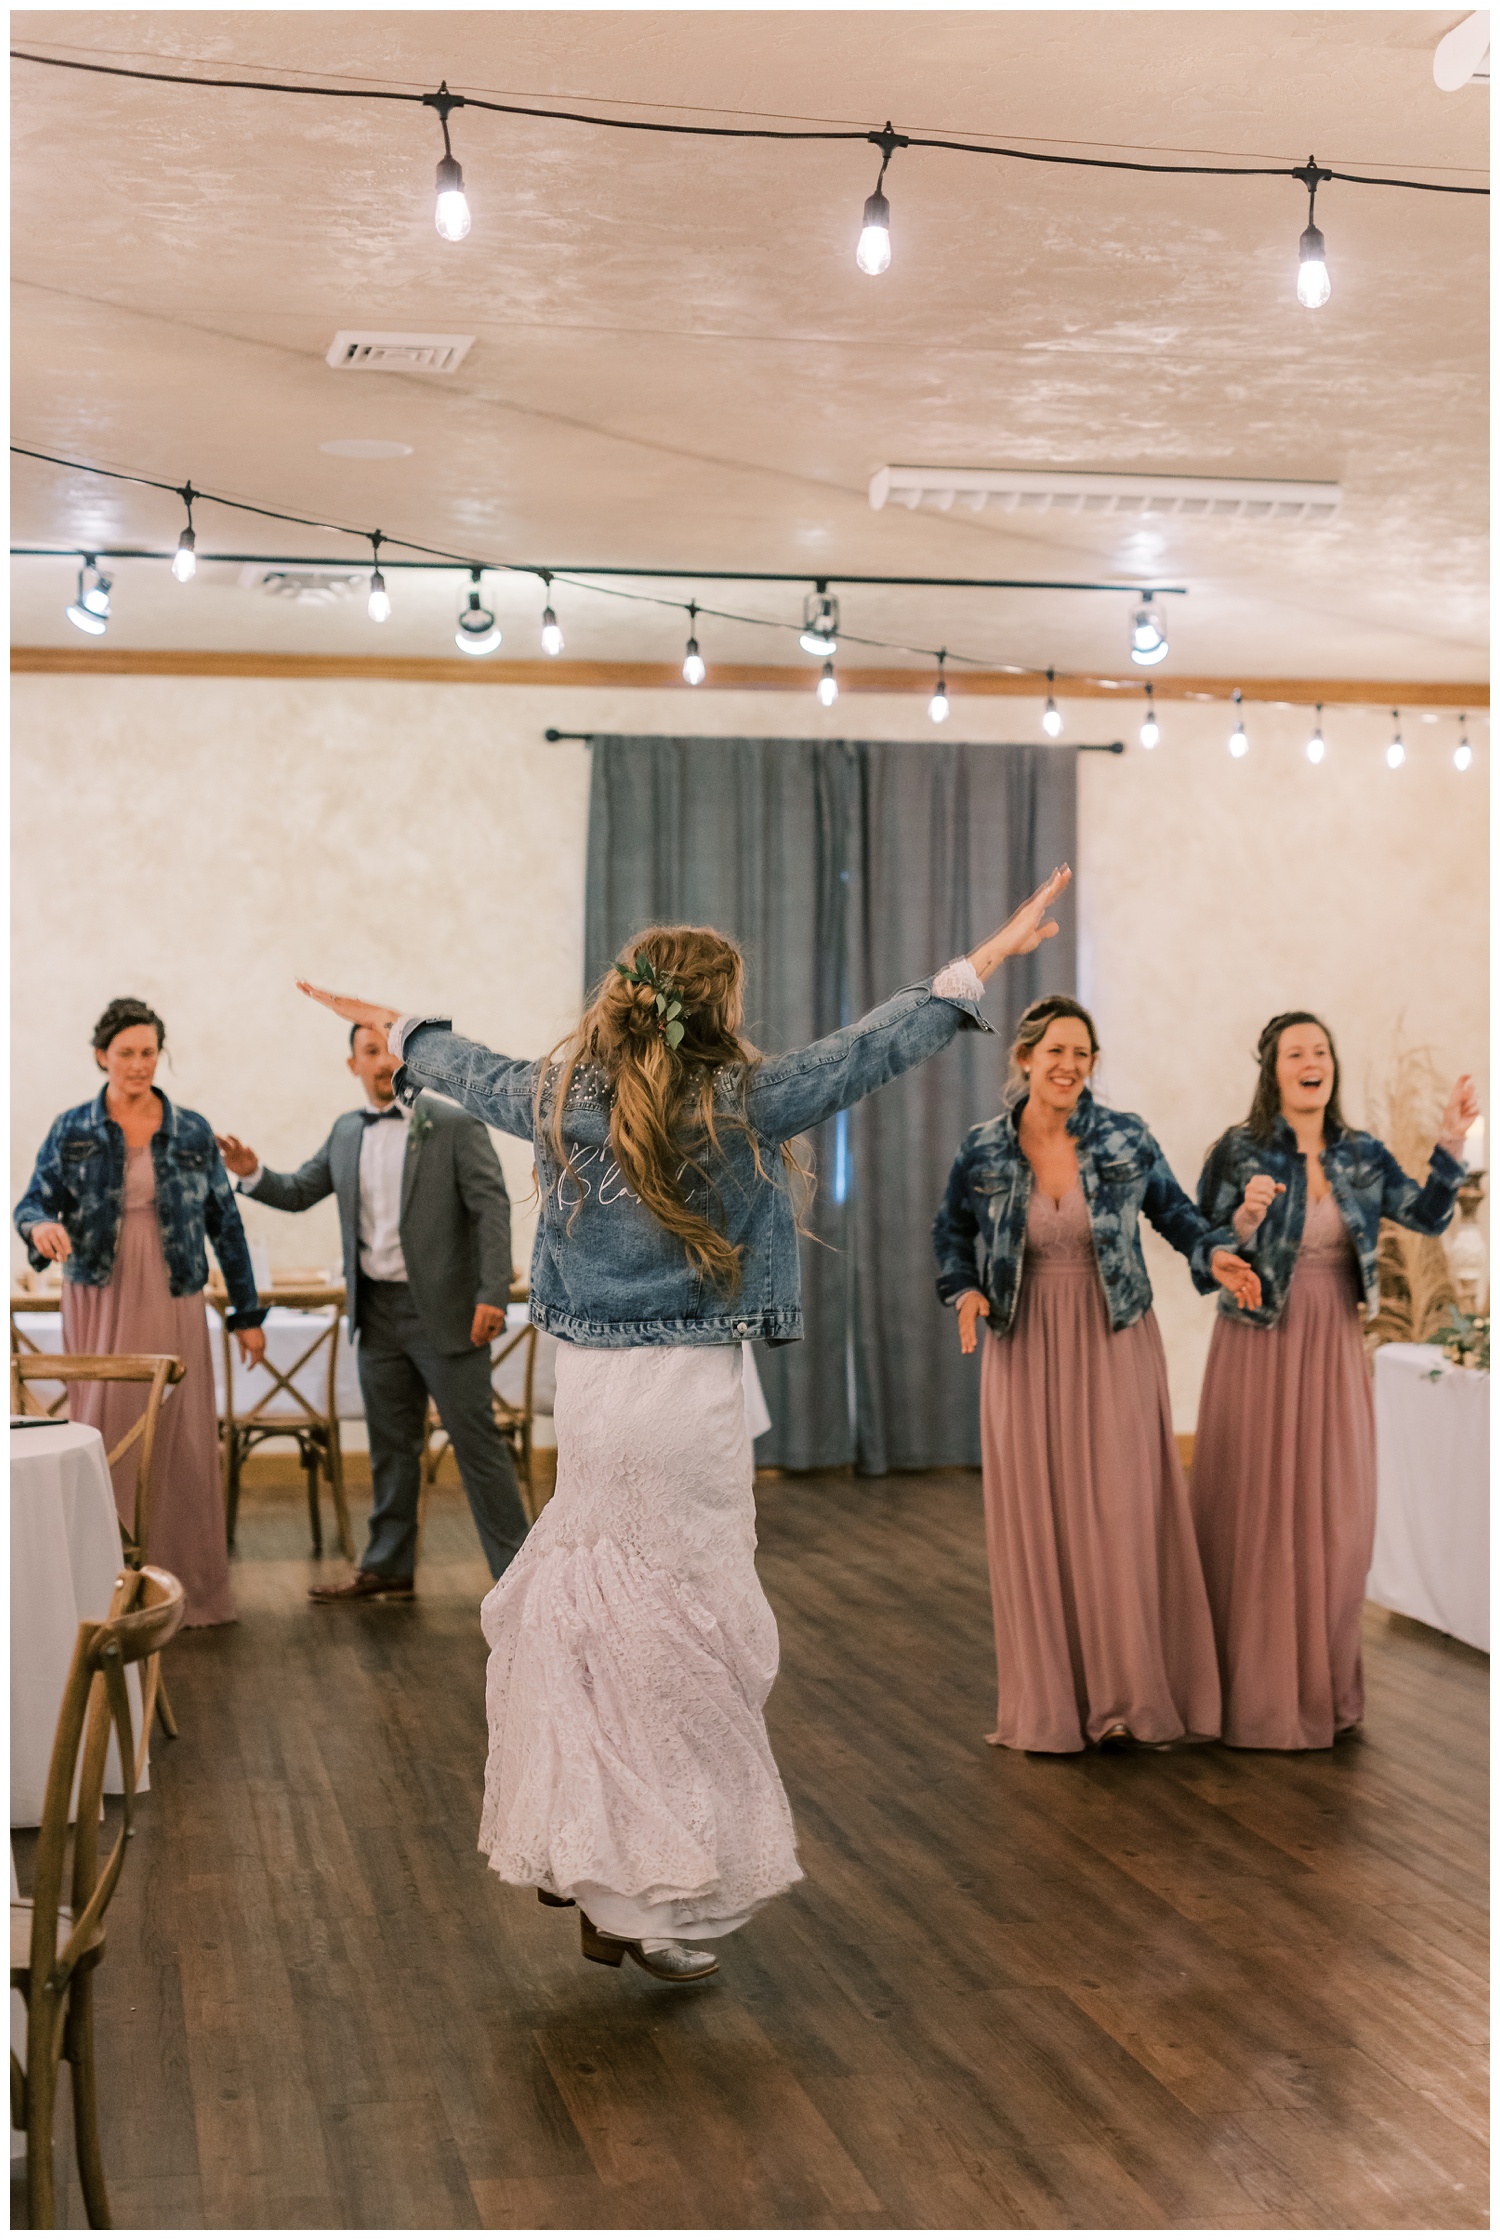 Bride and bridesmaids dancing at Illinois wedding reception